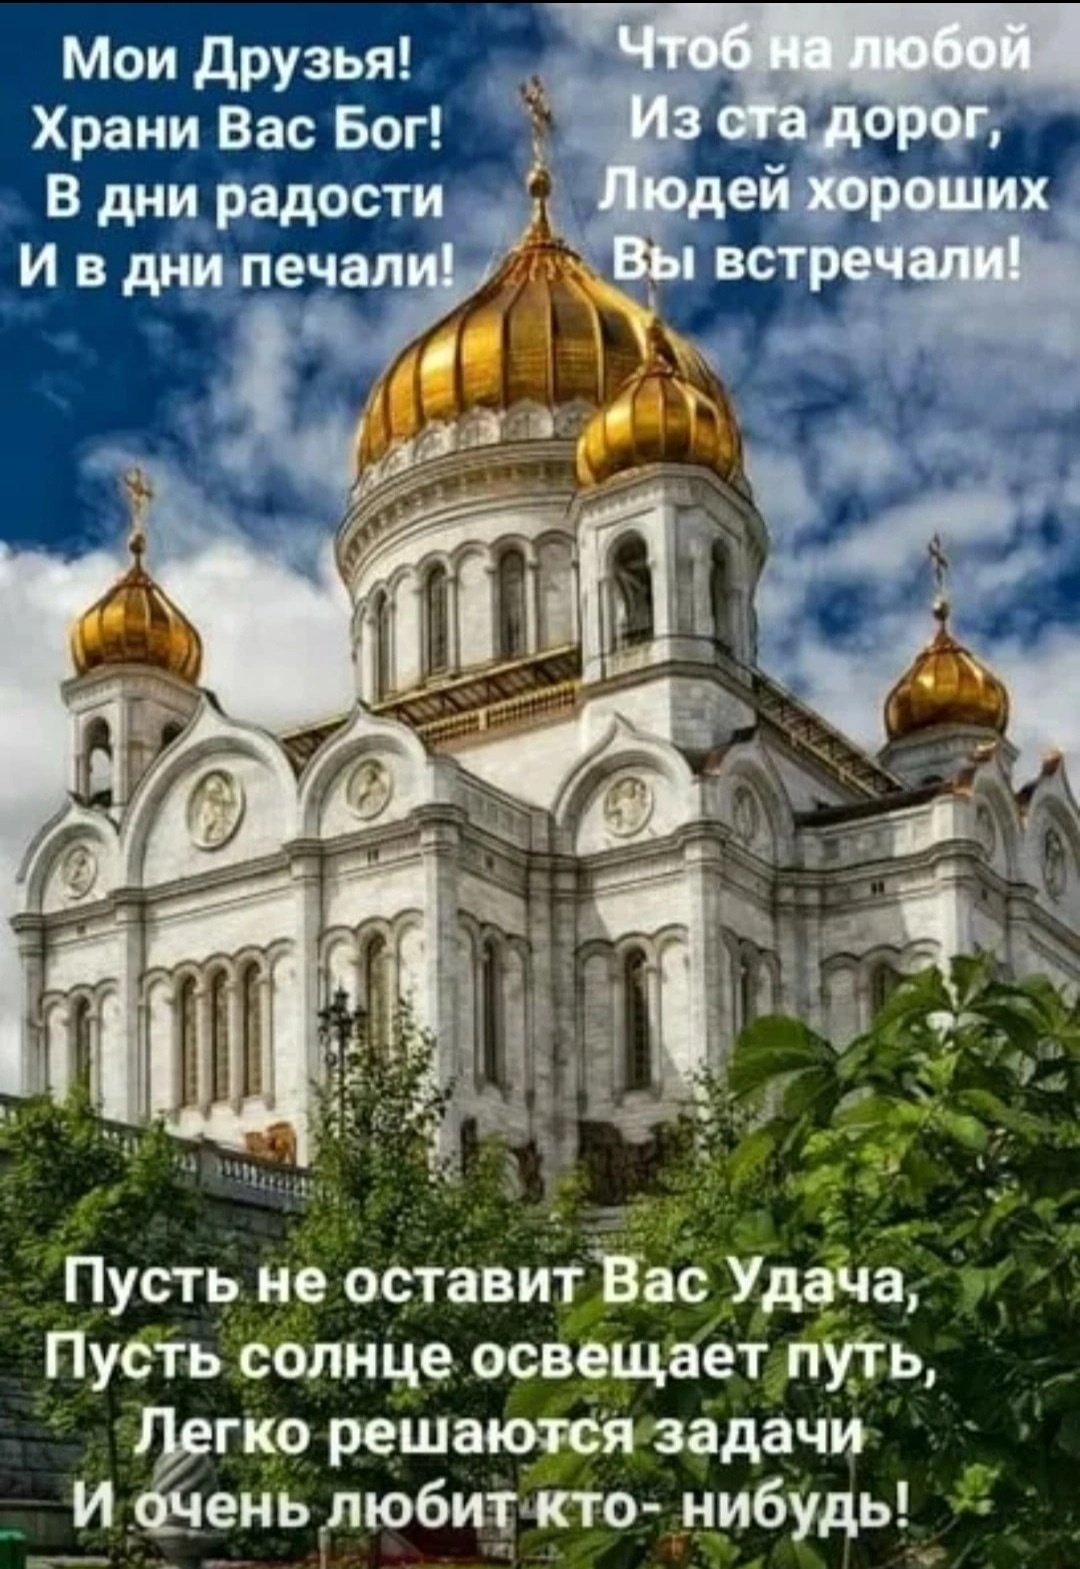 Картинки храни вас бог с пожеланиями. Москва. Храм Христа Спасителя. Хранимвас Бог. Храни вас Бог. Открытки храни вас Господь.